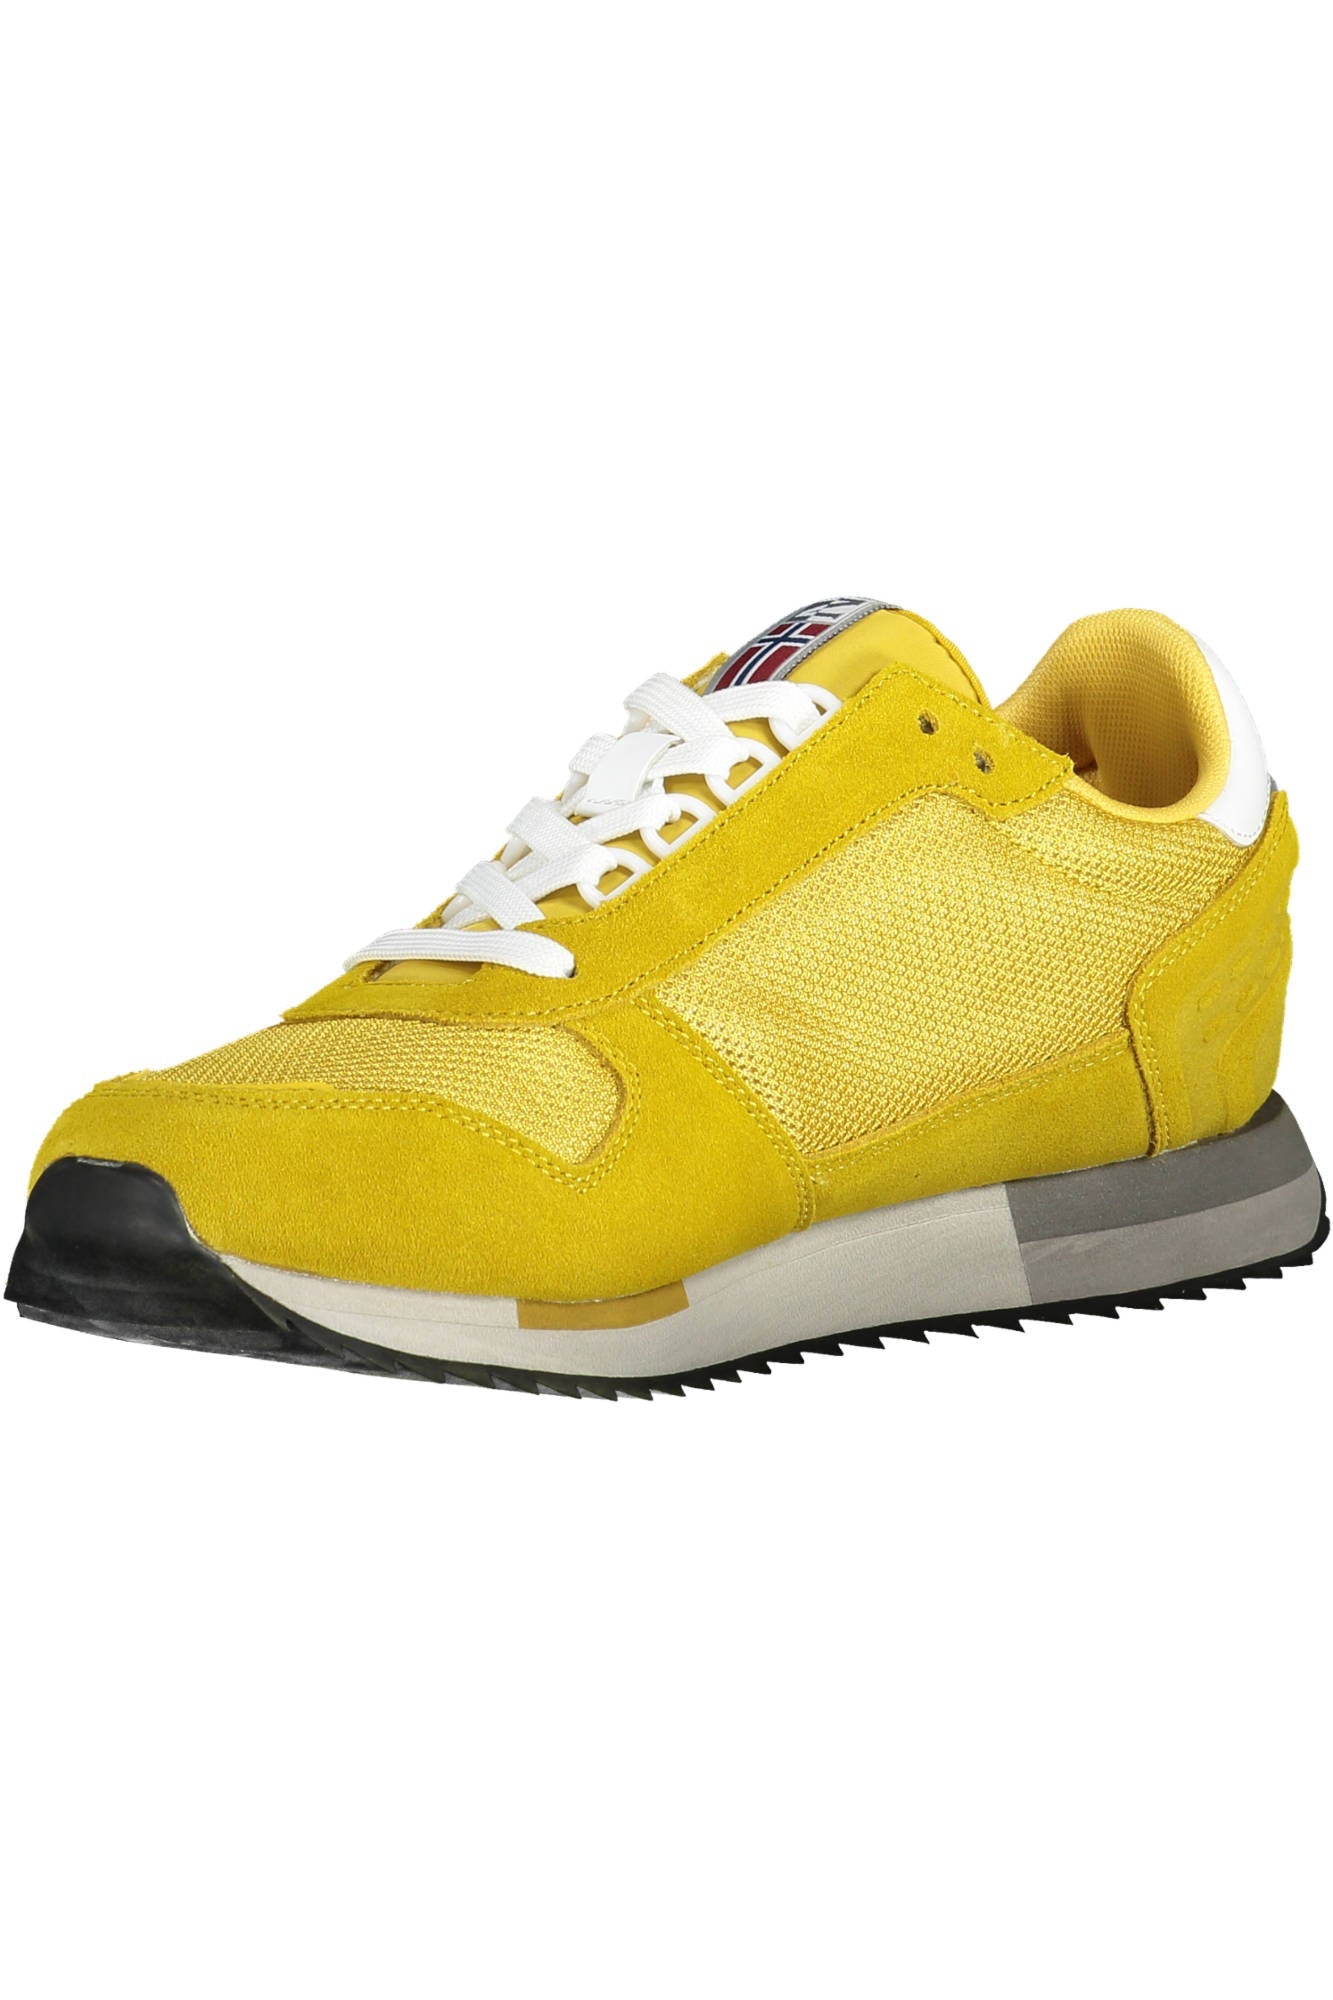 Napapijri Yellow Sneakers - Fizigo